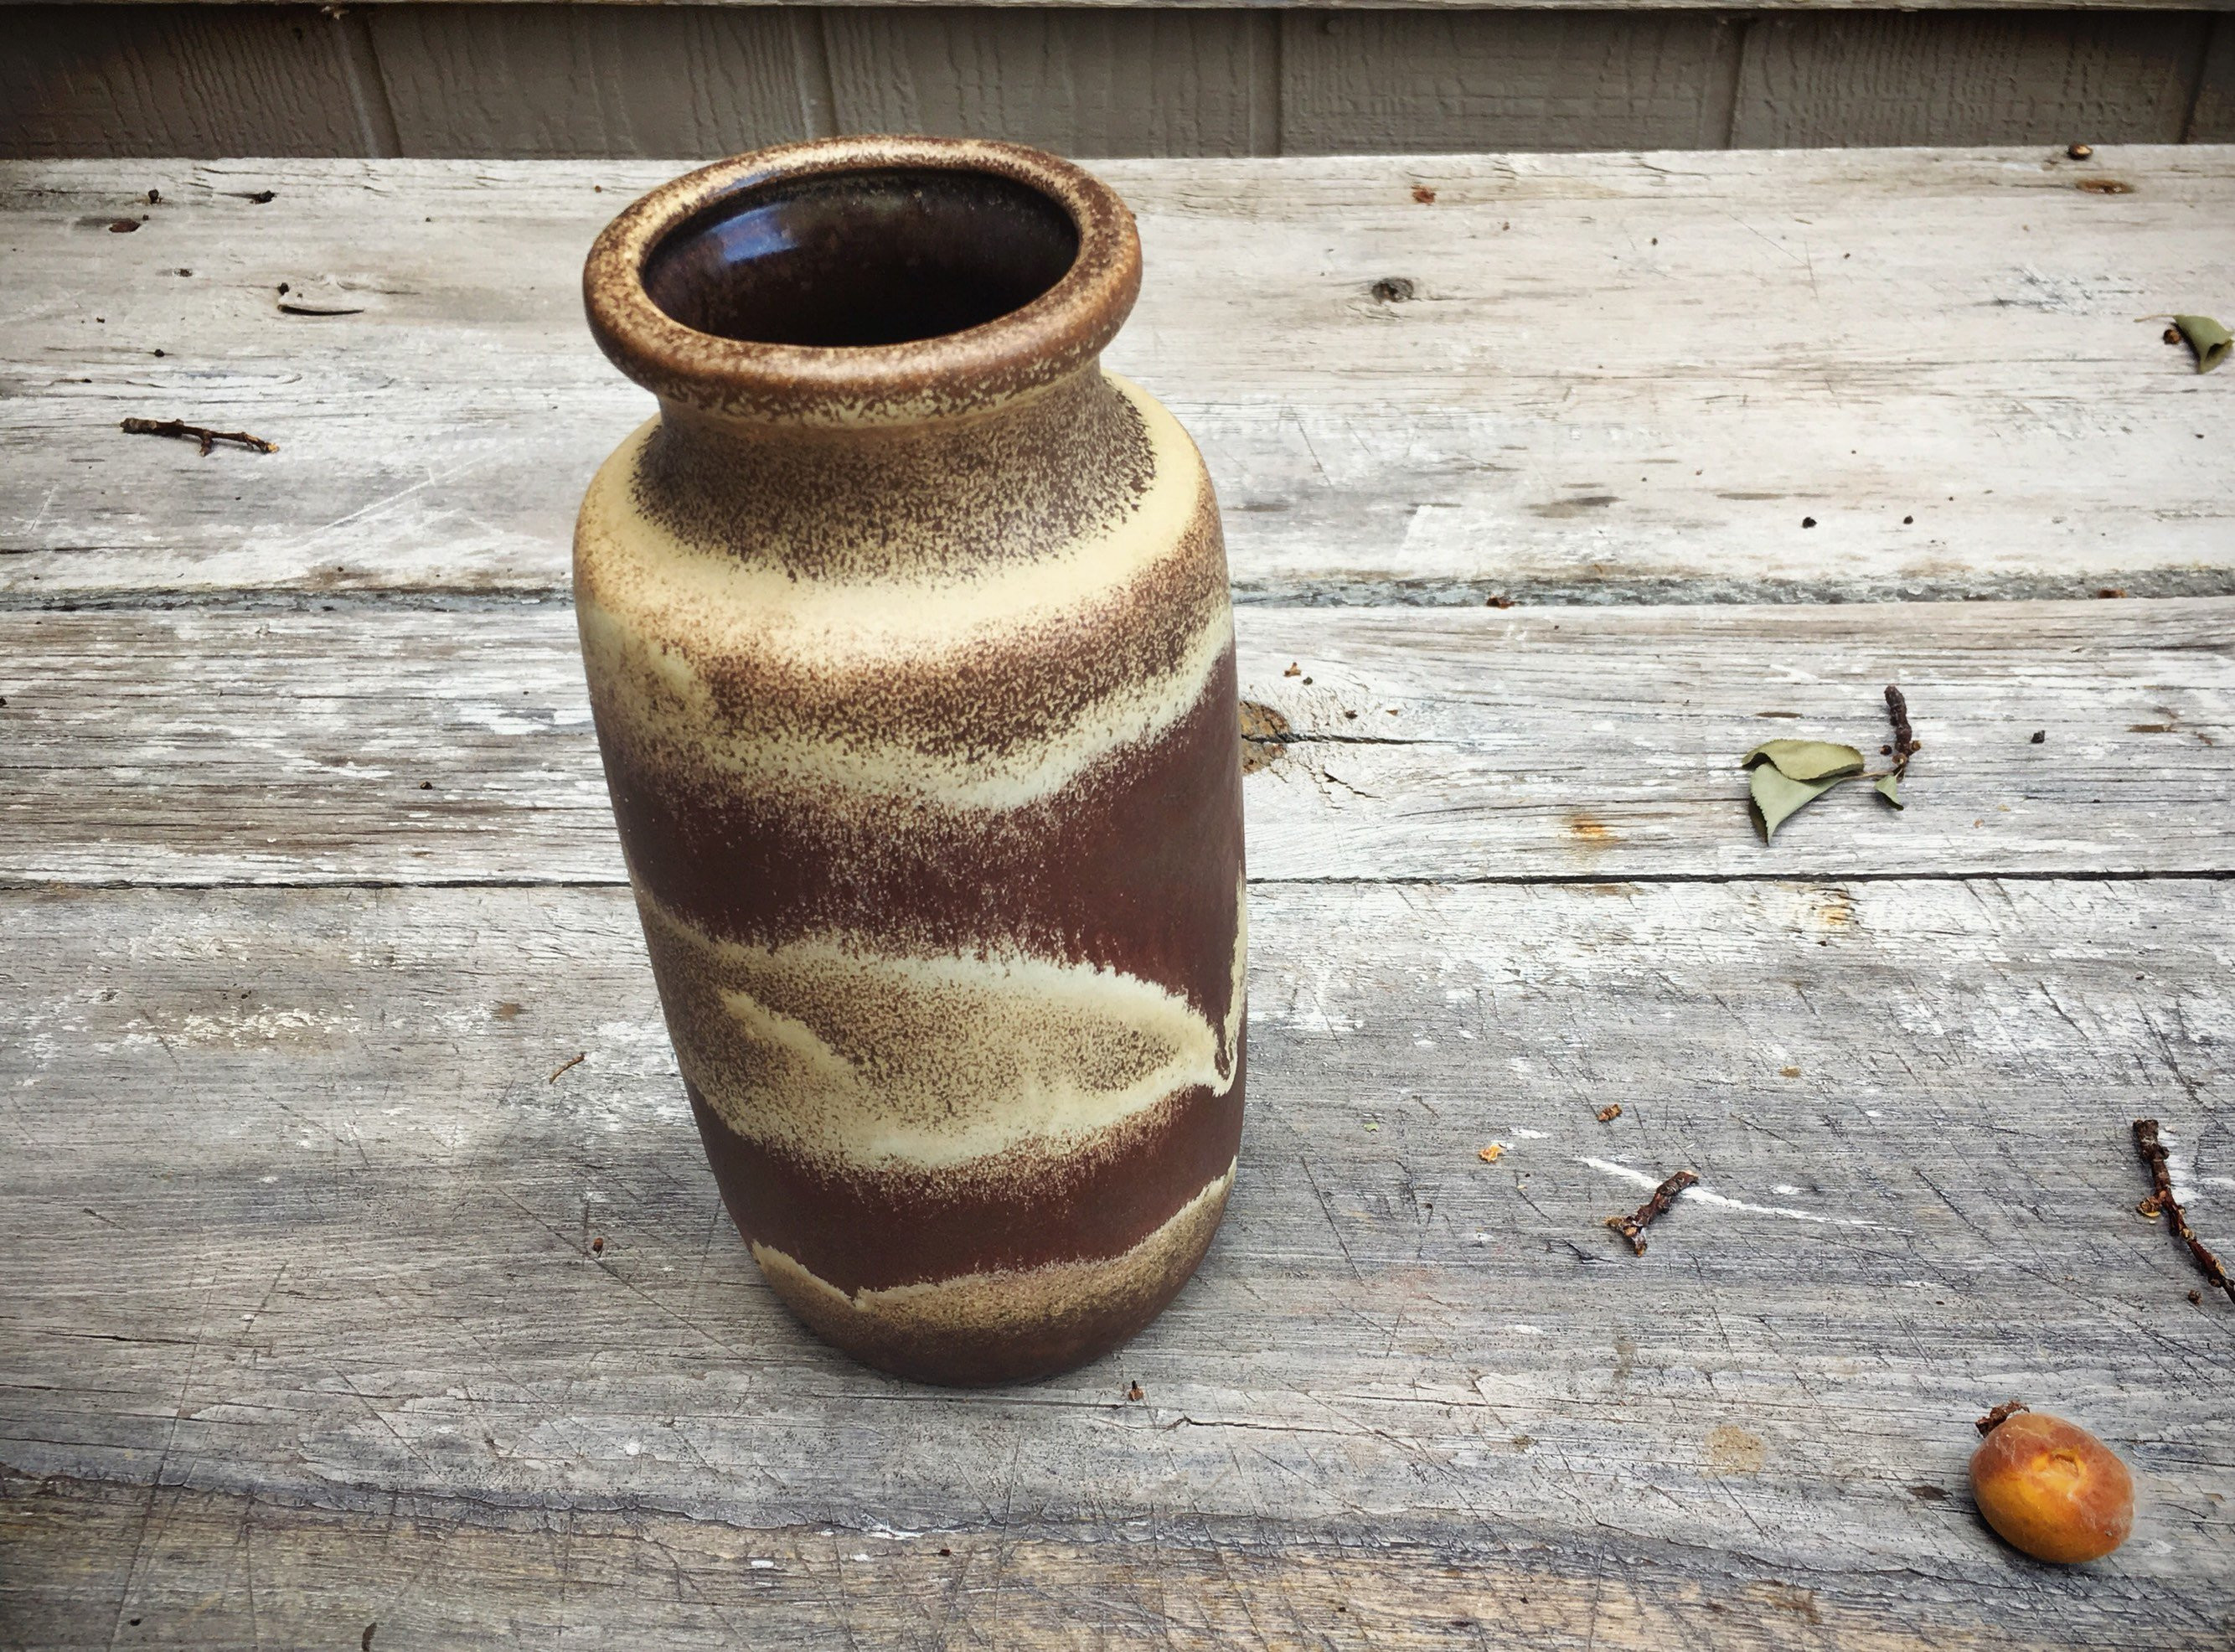 twine wrapped vase of mid century pottery west germany vase 213 20 scheurich keramik etsy within image 5 image 6